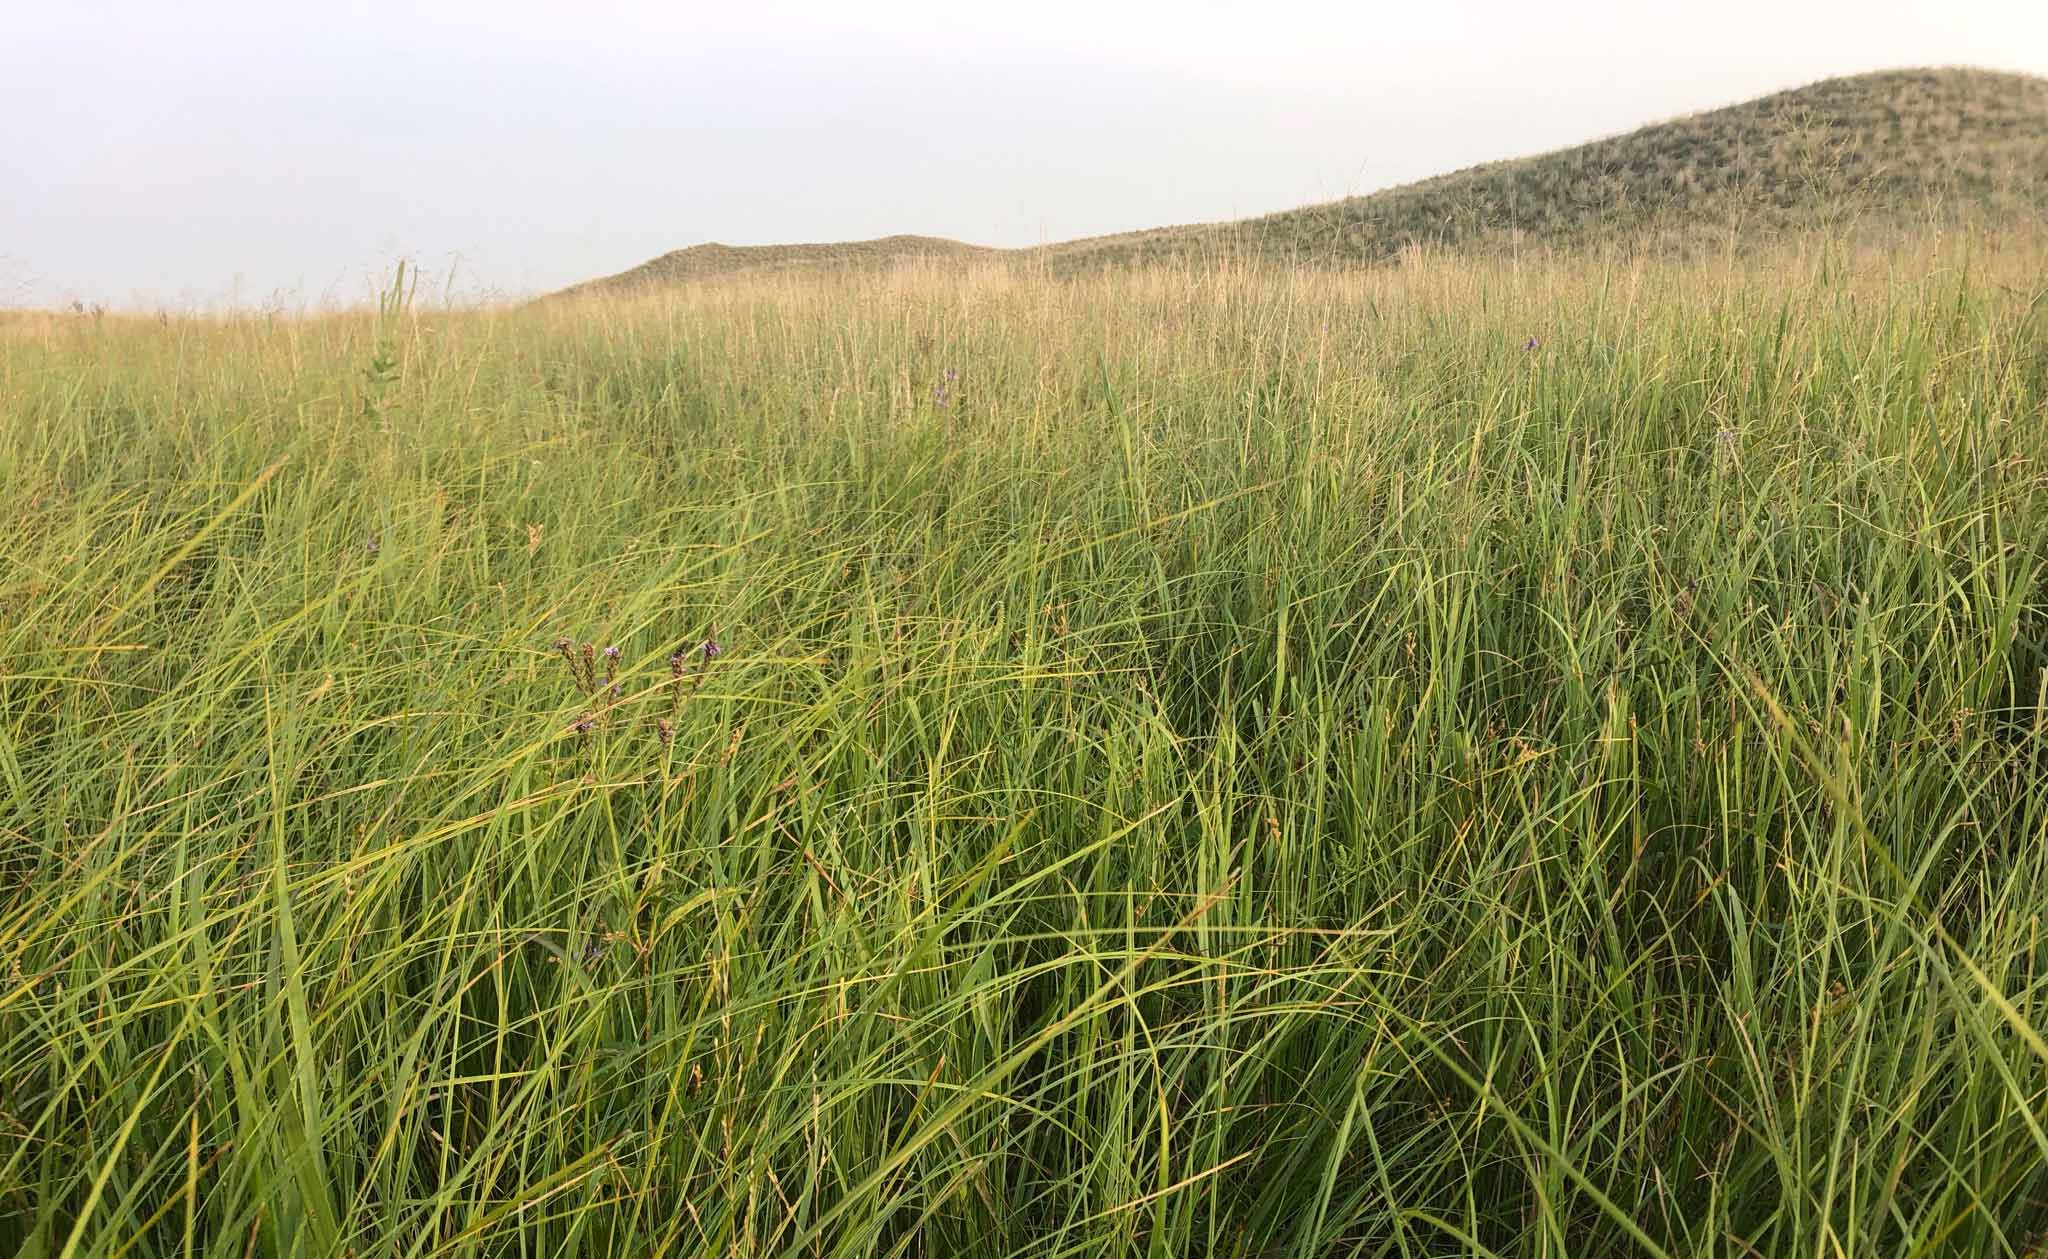 Thick grass and small hill at Hutchinson Organic Ranch in Nebraska April 2022.